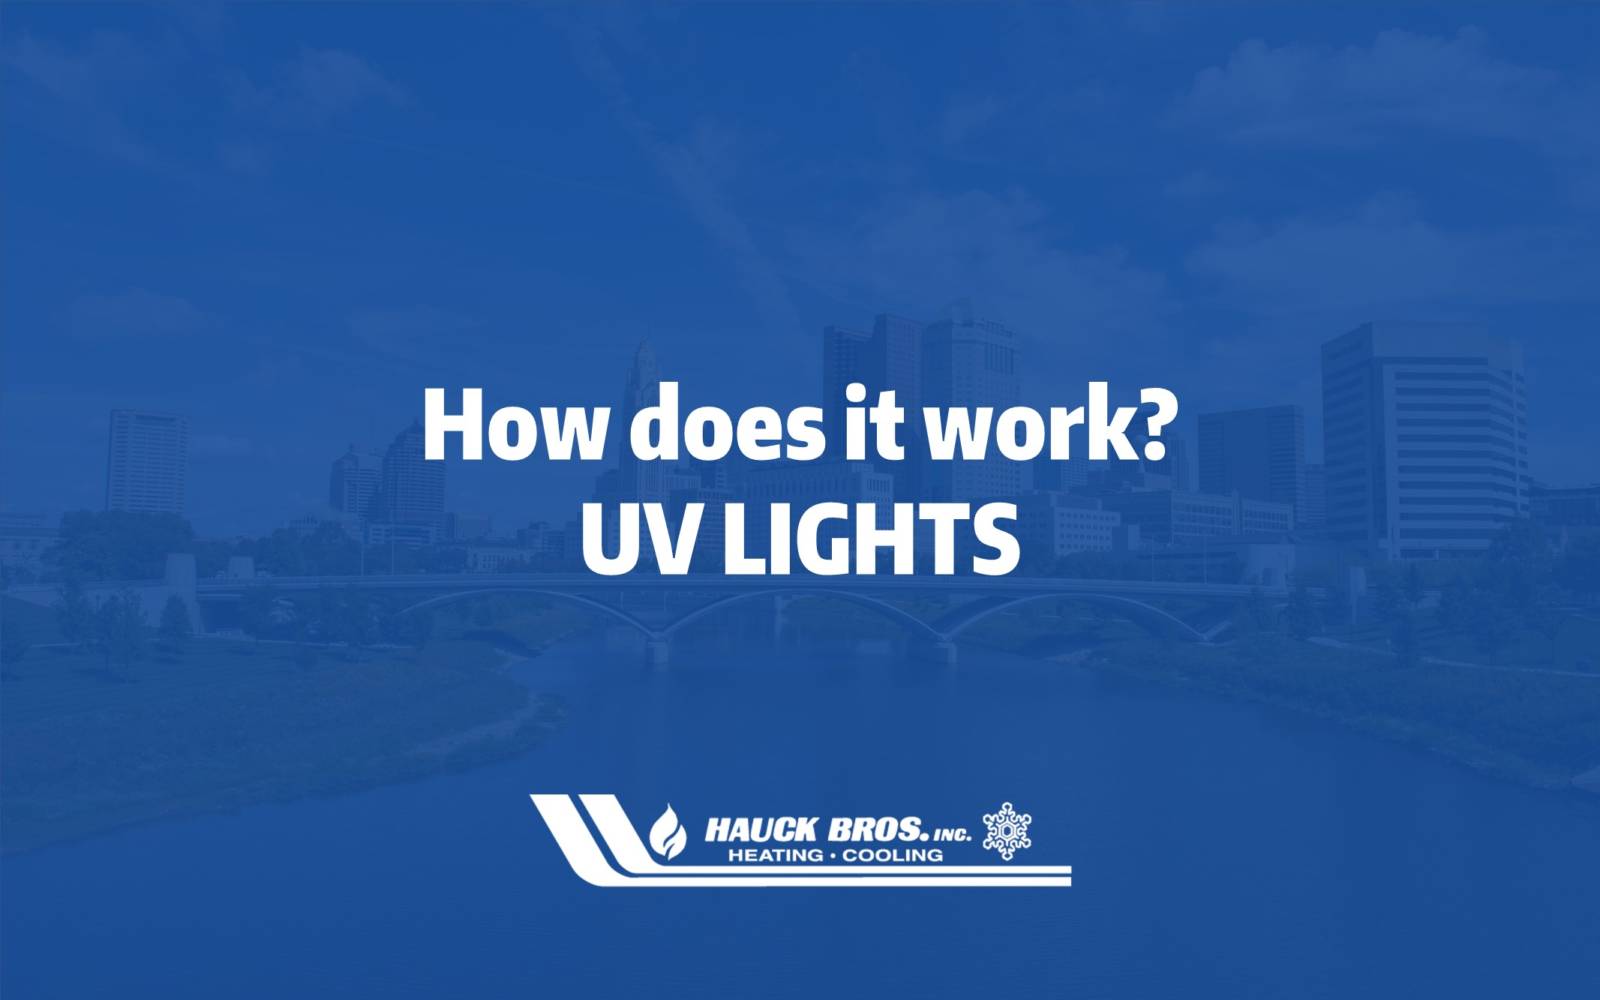 uv lights